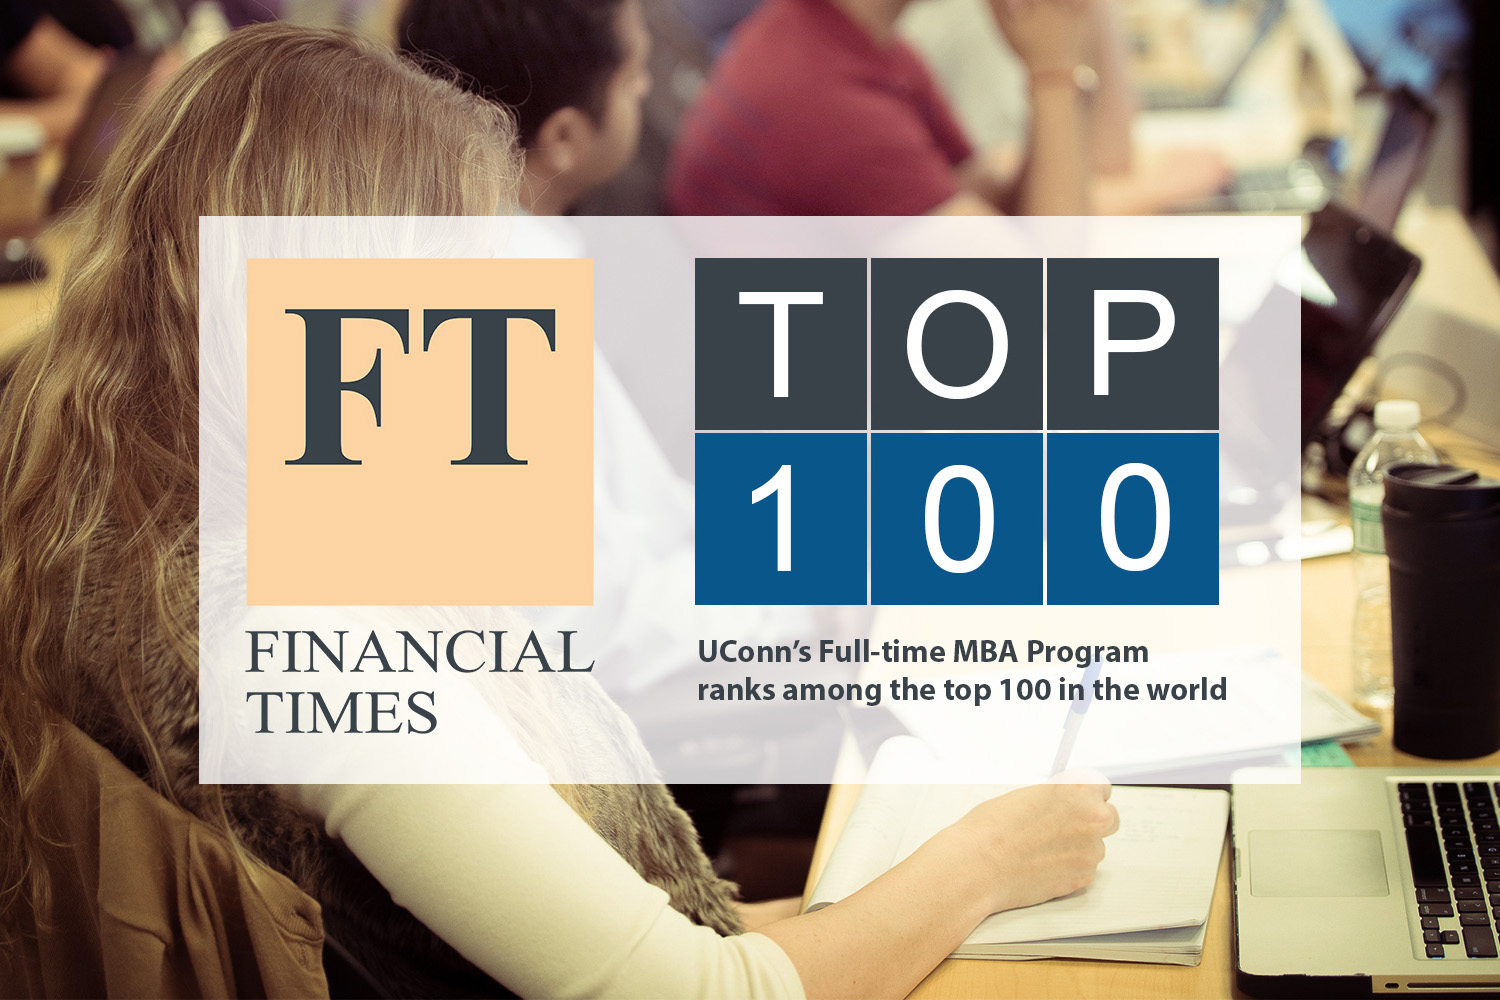 UConn's Full-time MBA Program ranks among the top 100 in the world.